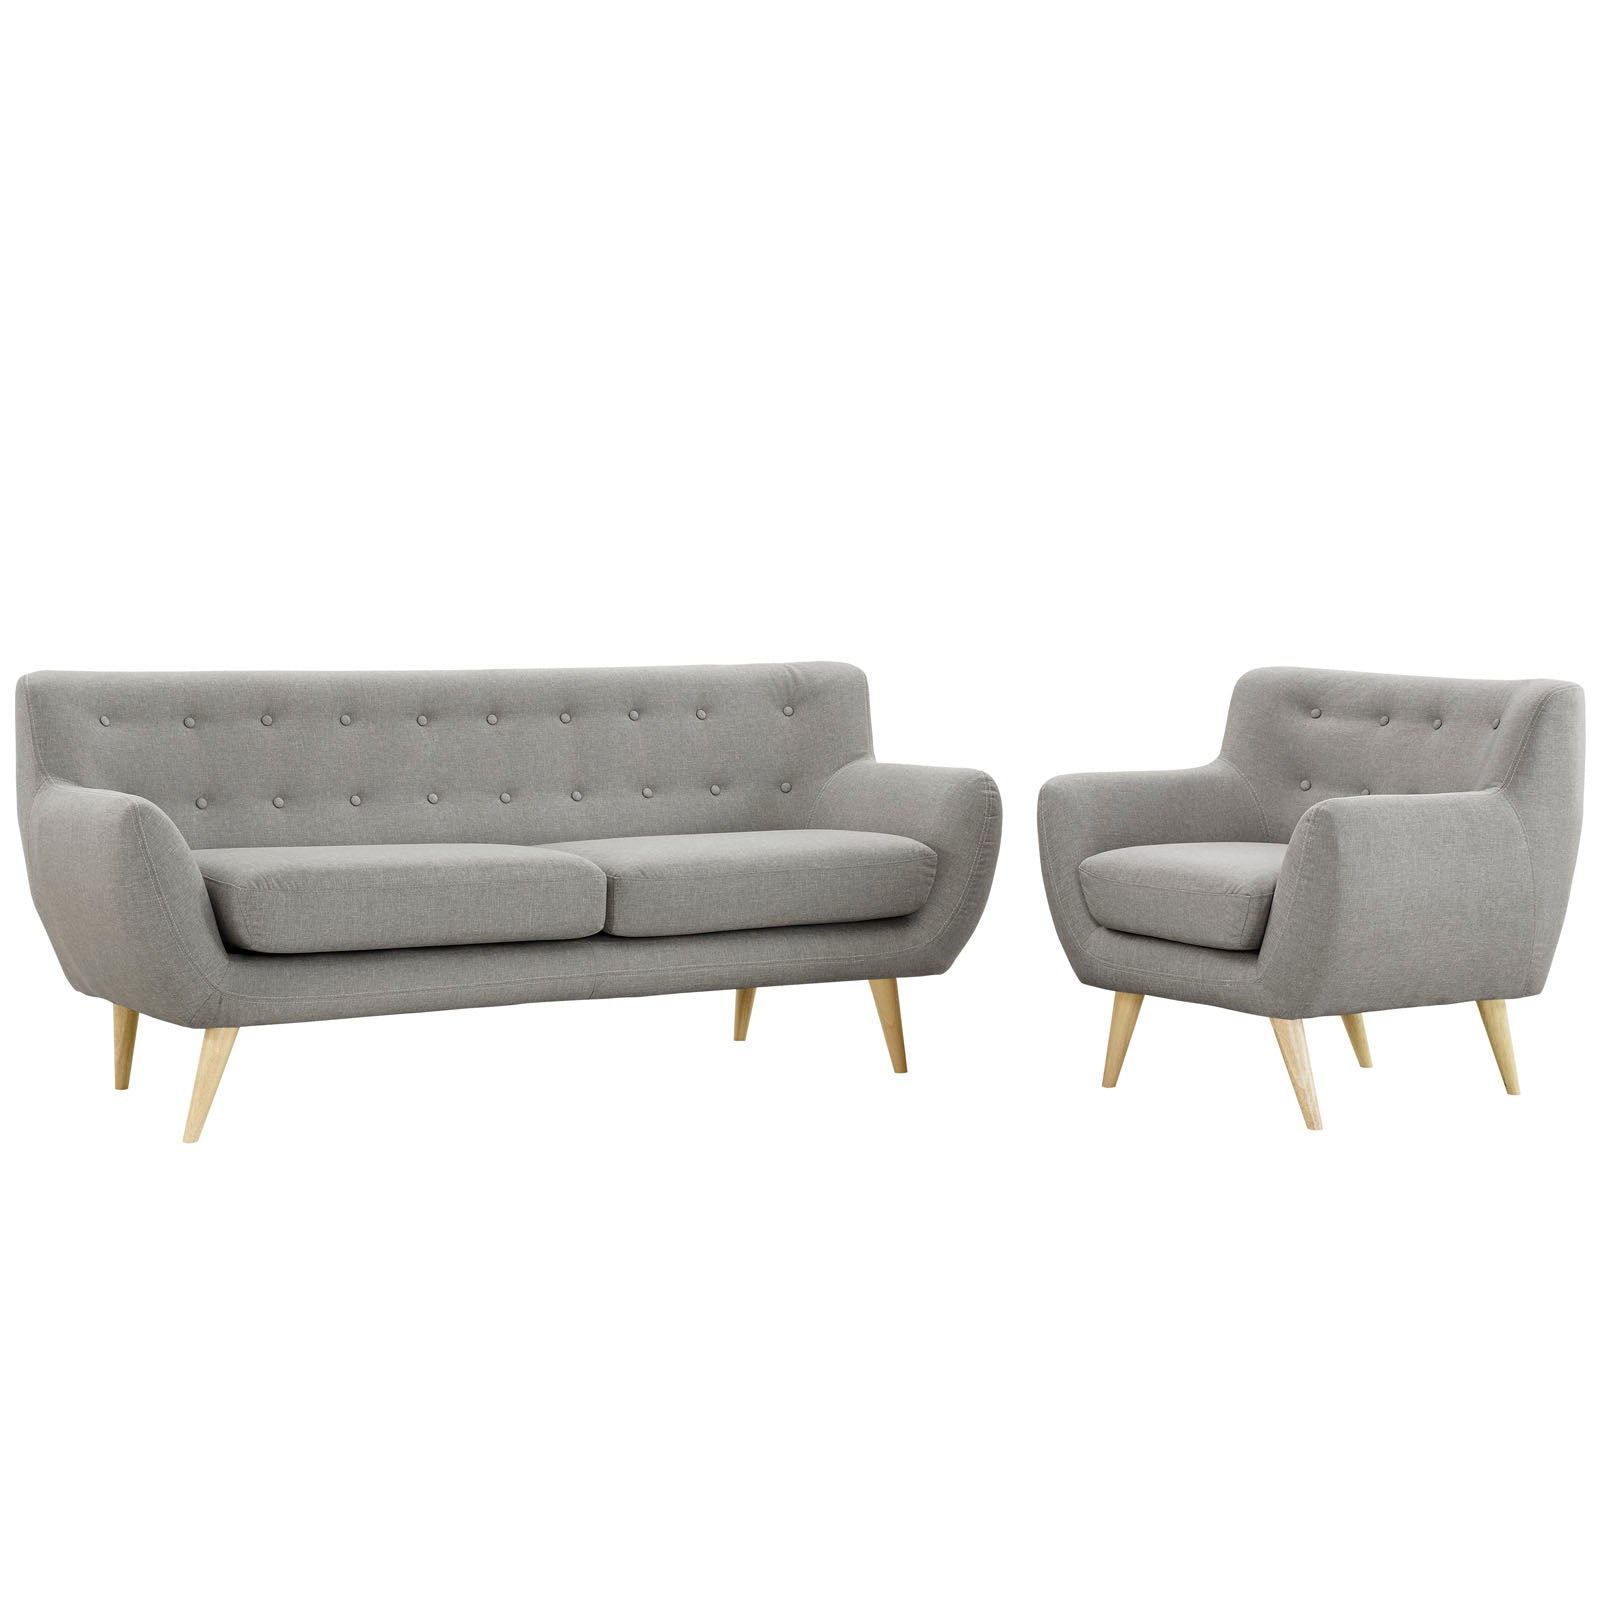 Modway Living Room Sets - Remark 2 Piece Living Room Set Light Gray Sofa